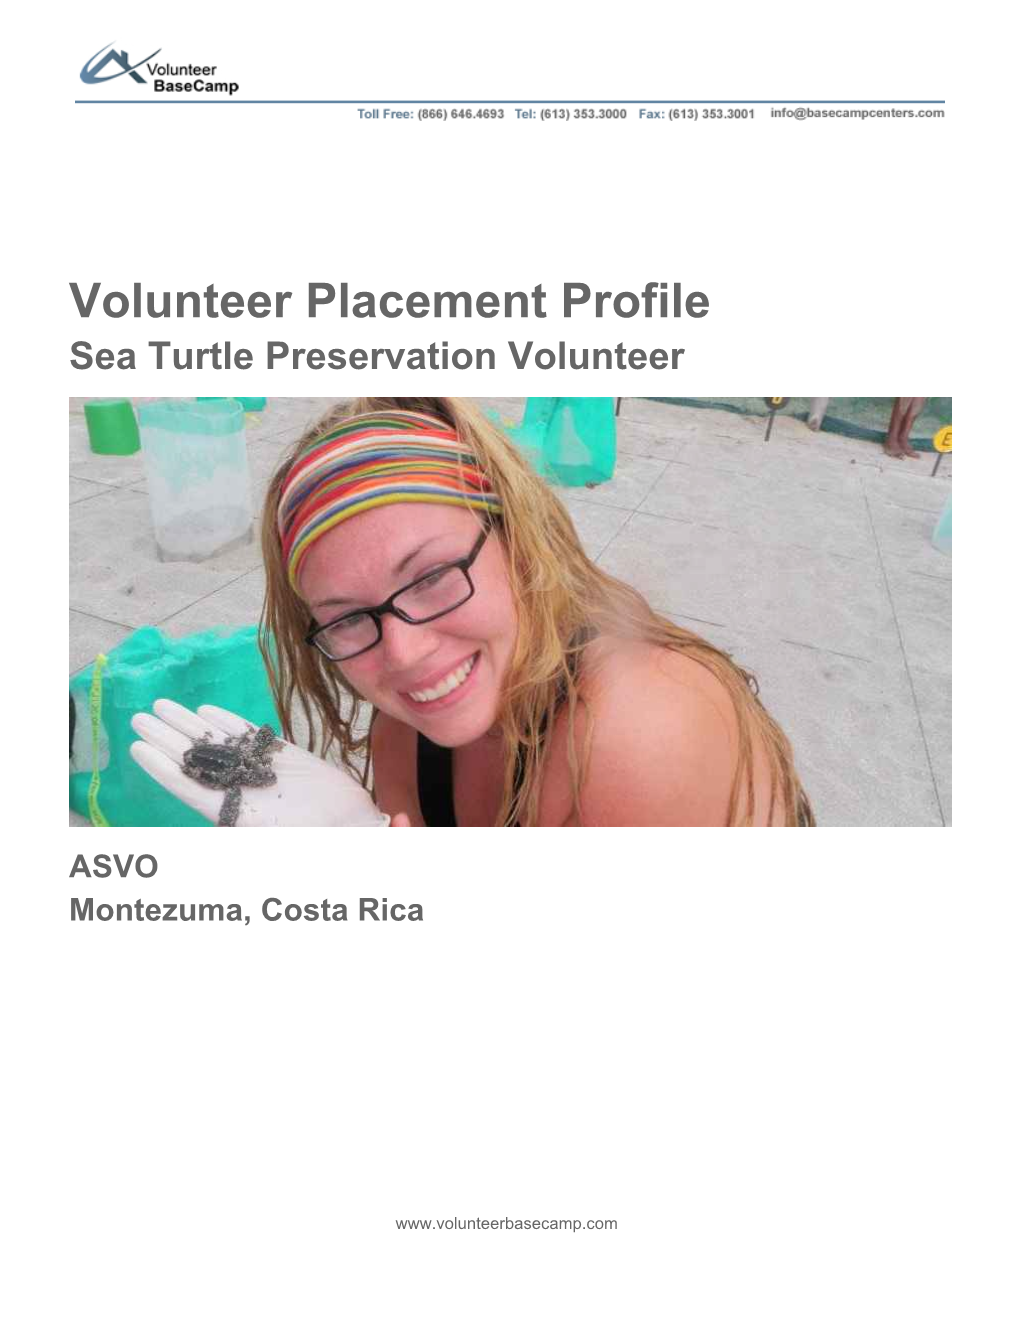 Volunteer Placement Profile Sea Turtle Preservation Volunteer